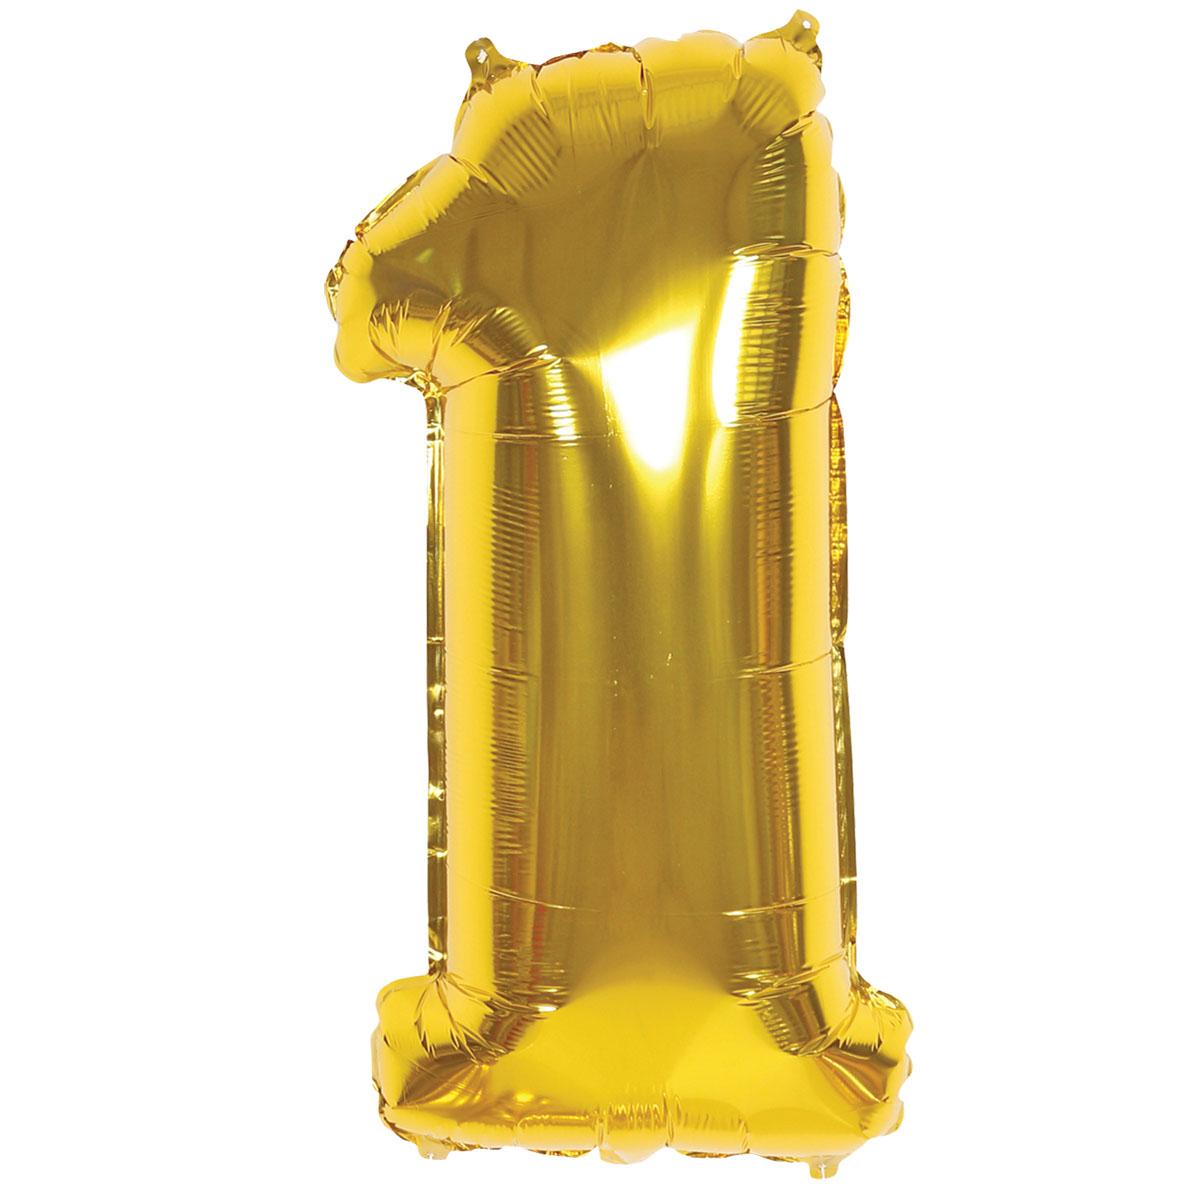 Selected image for PARTY Balon broj 1 60cm UNL-1435 zlatni